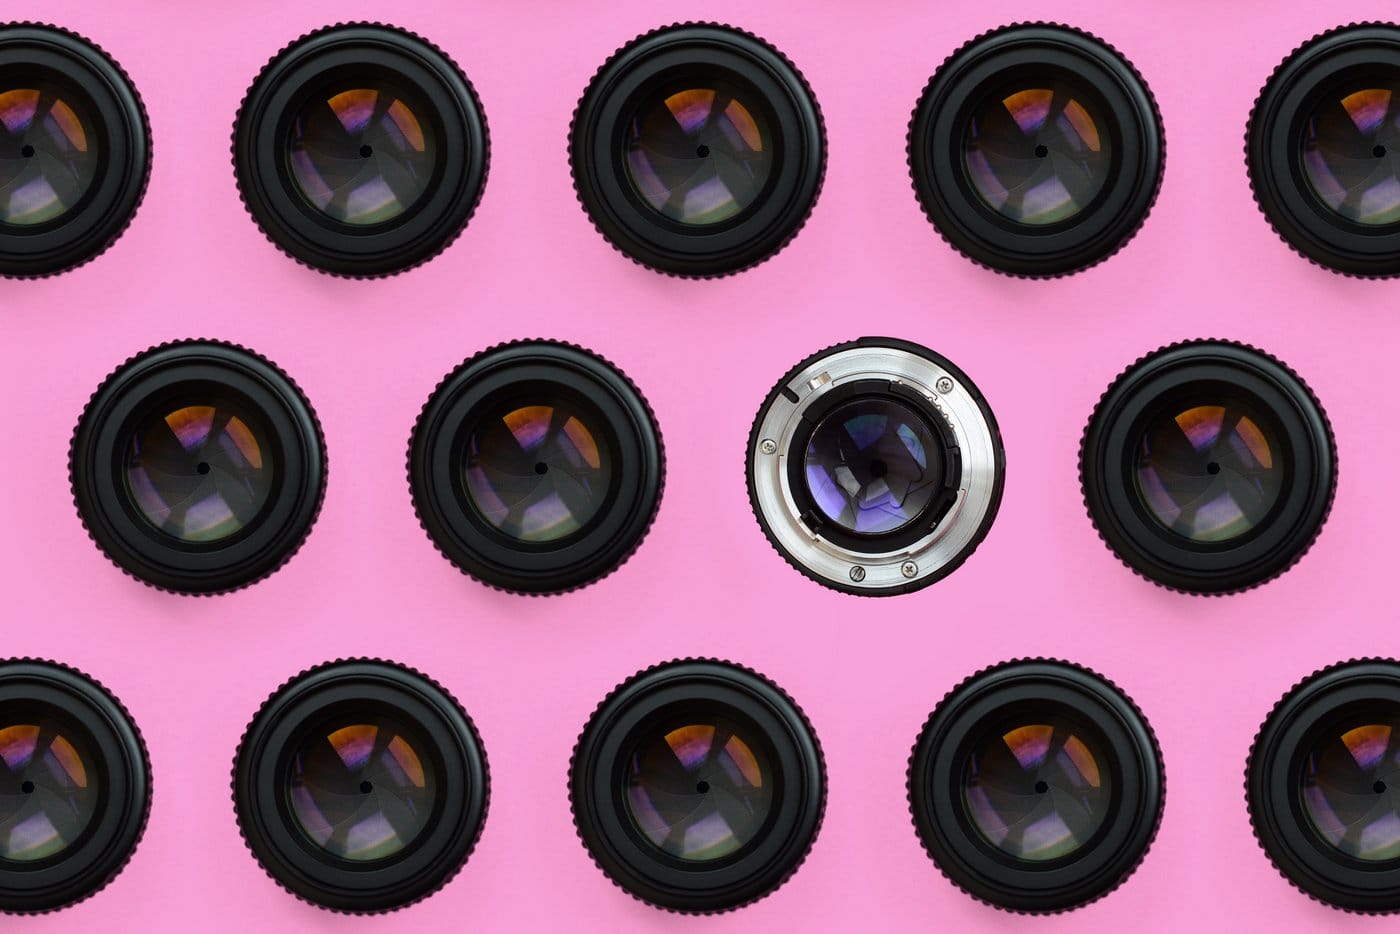 DSLR camera lenses and apertures